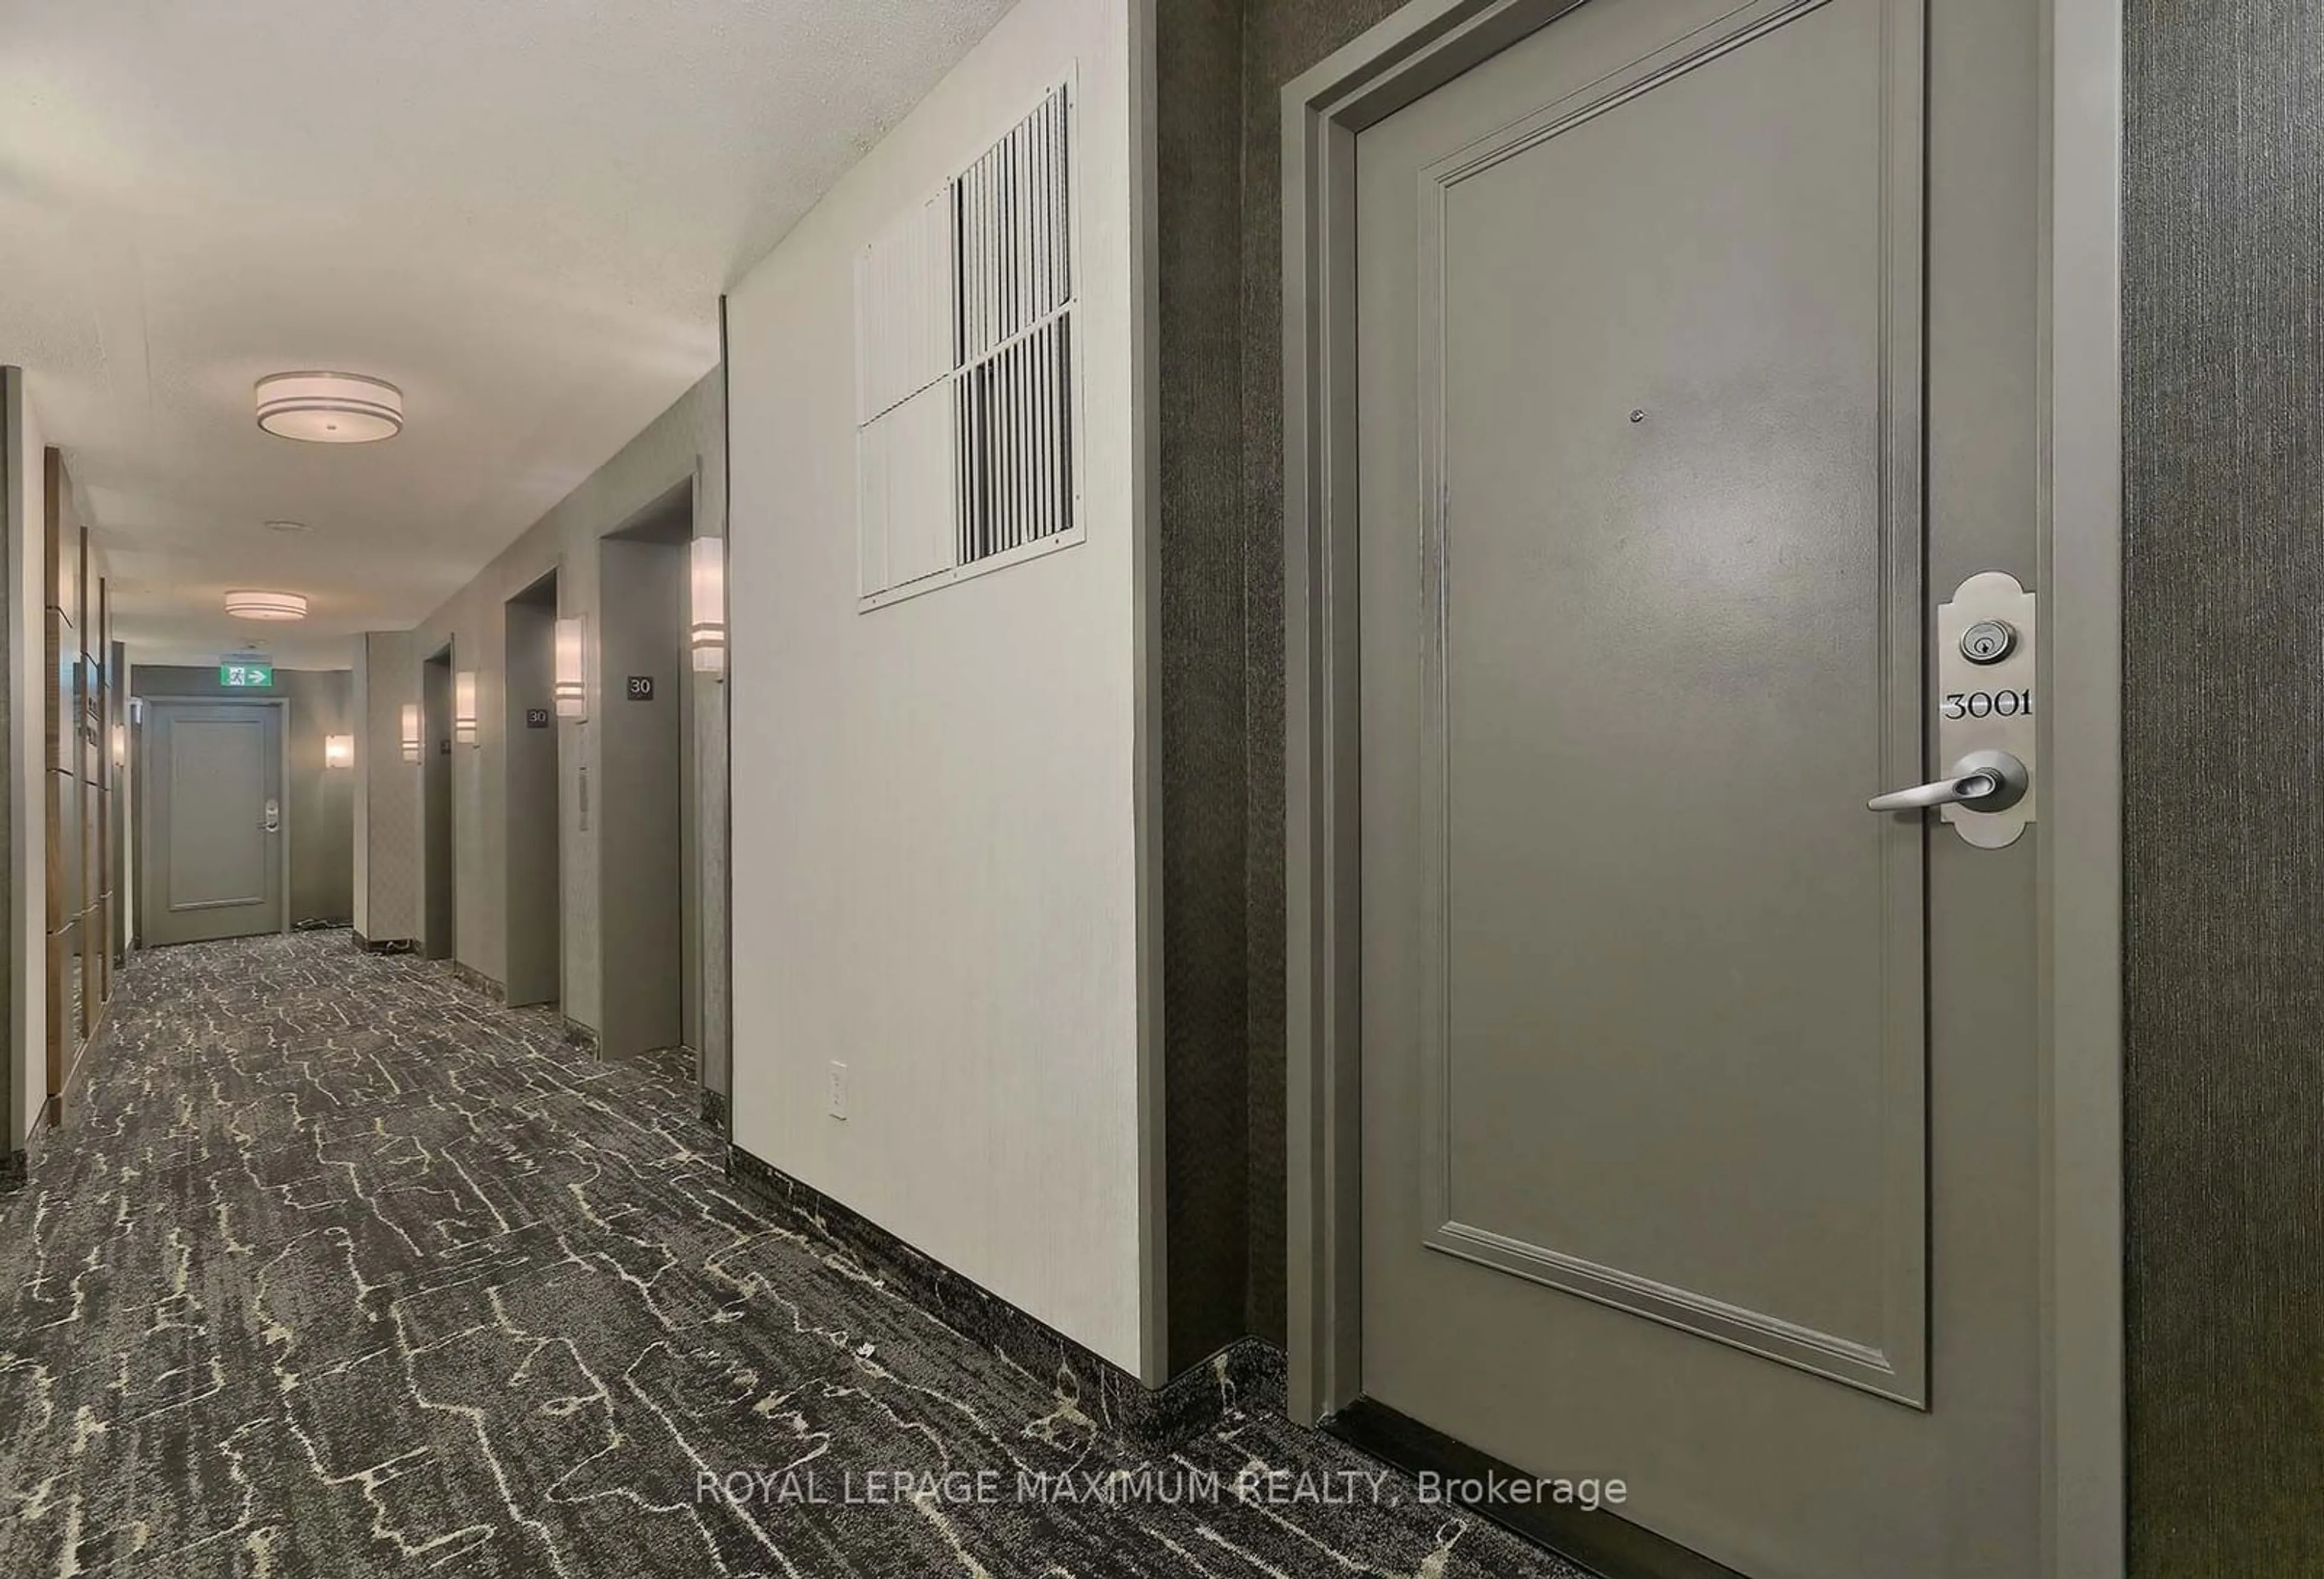 Other indoor space for 155 Beecroft Rd #3001, Toronto Ontario M2N 7C6